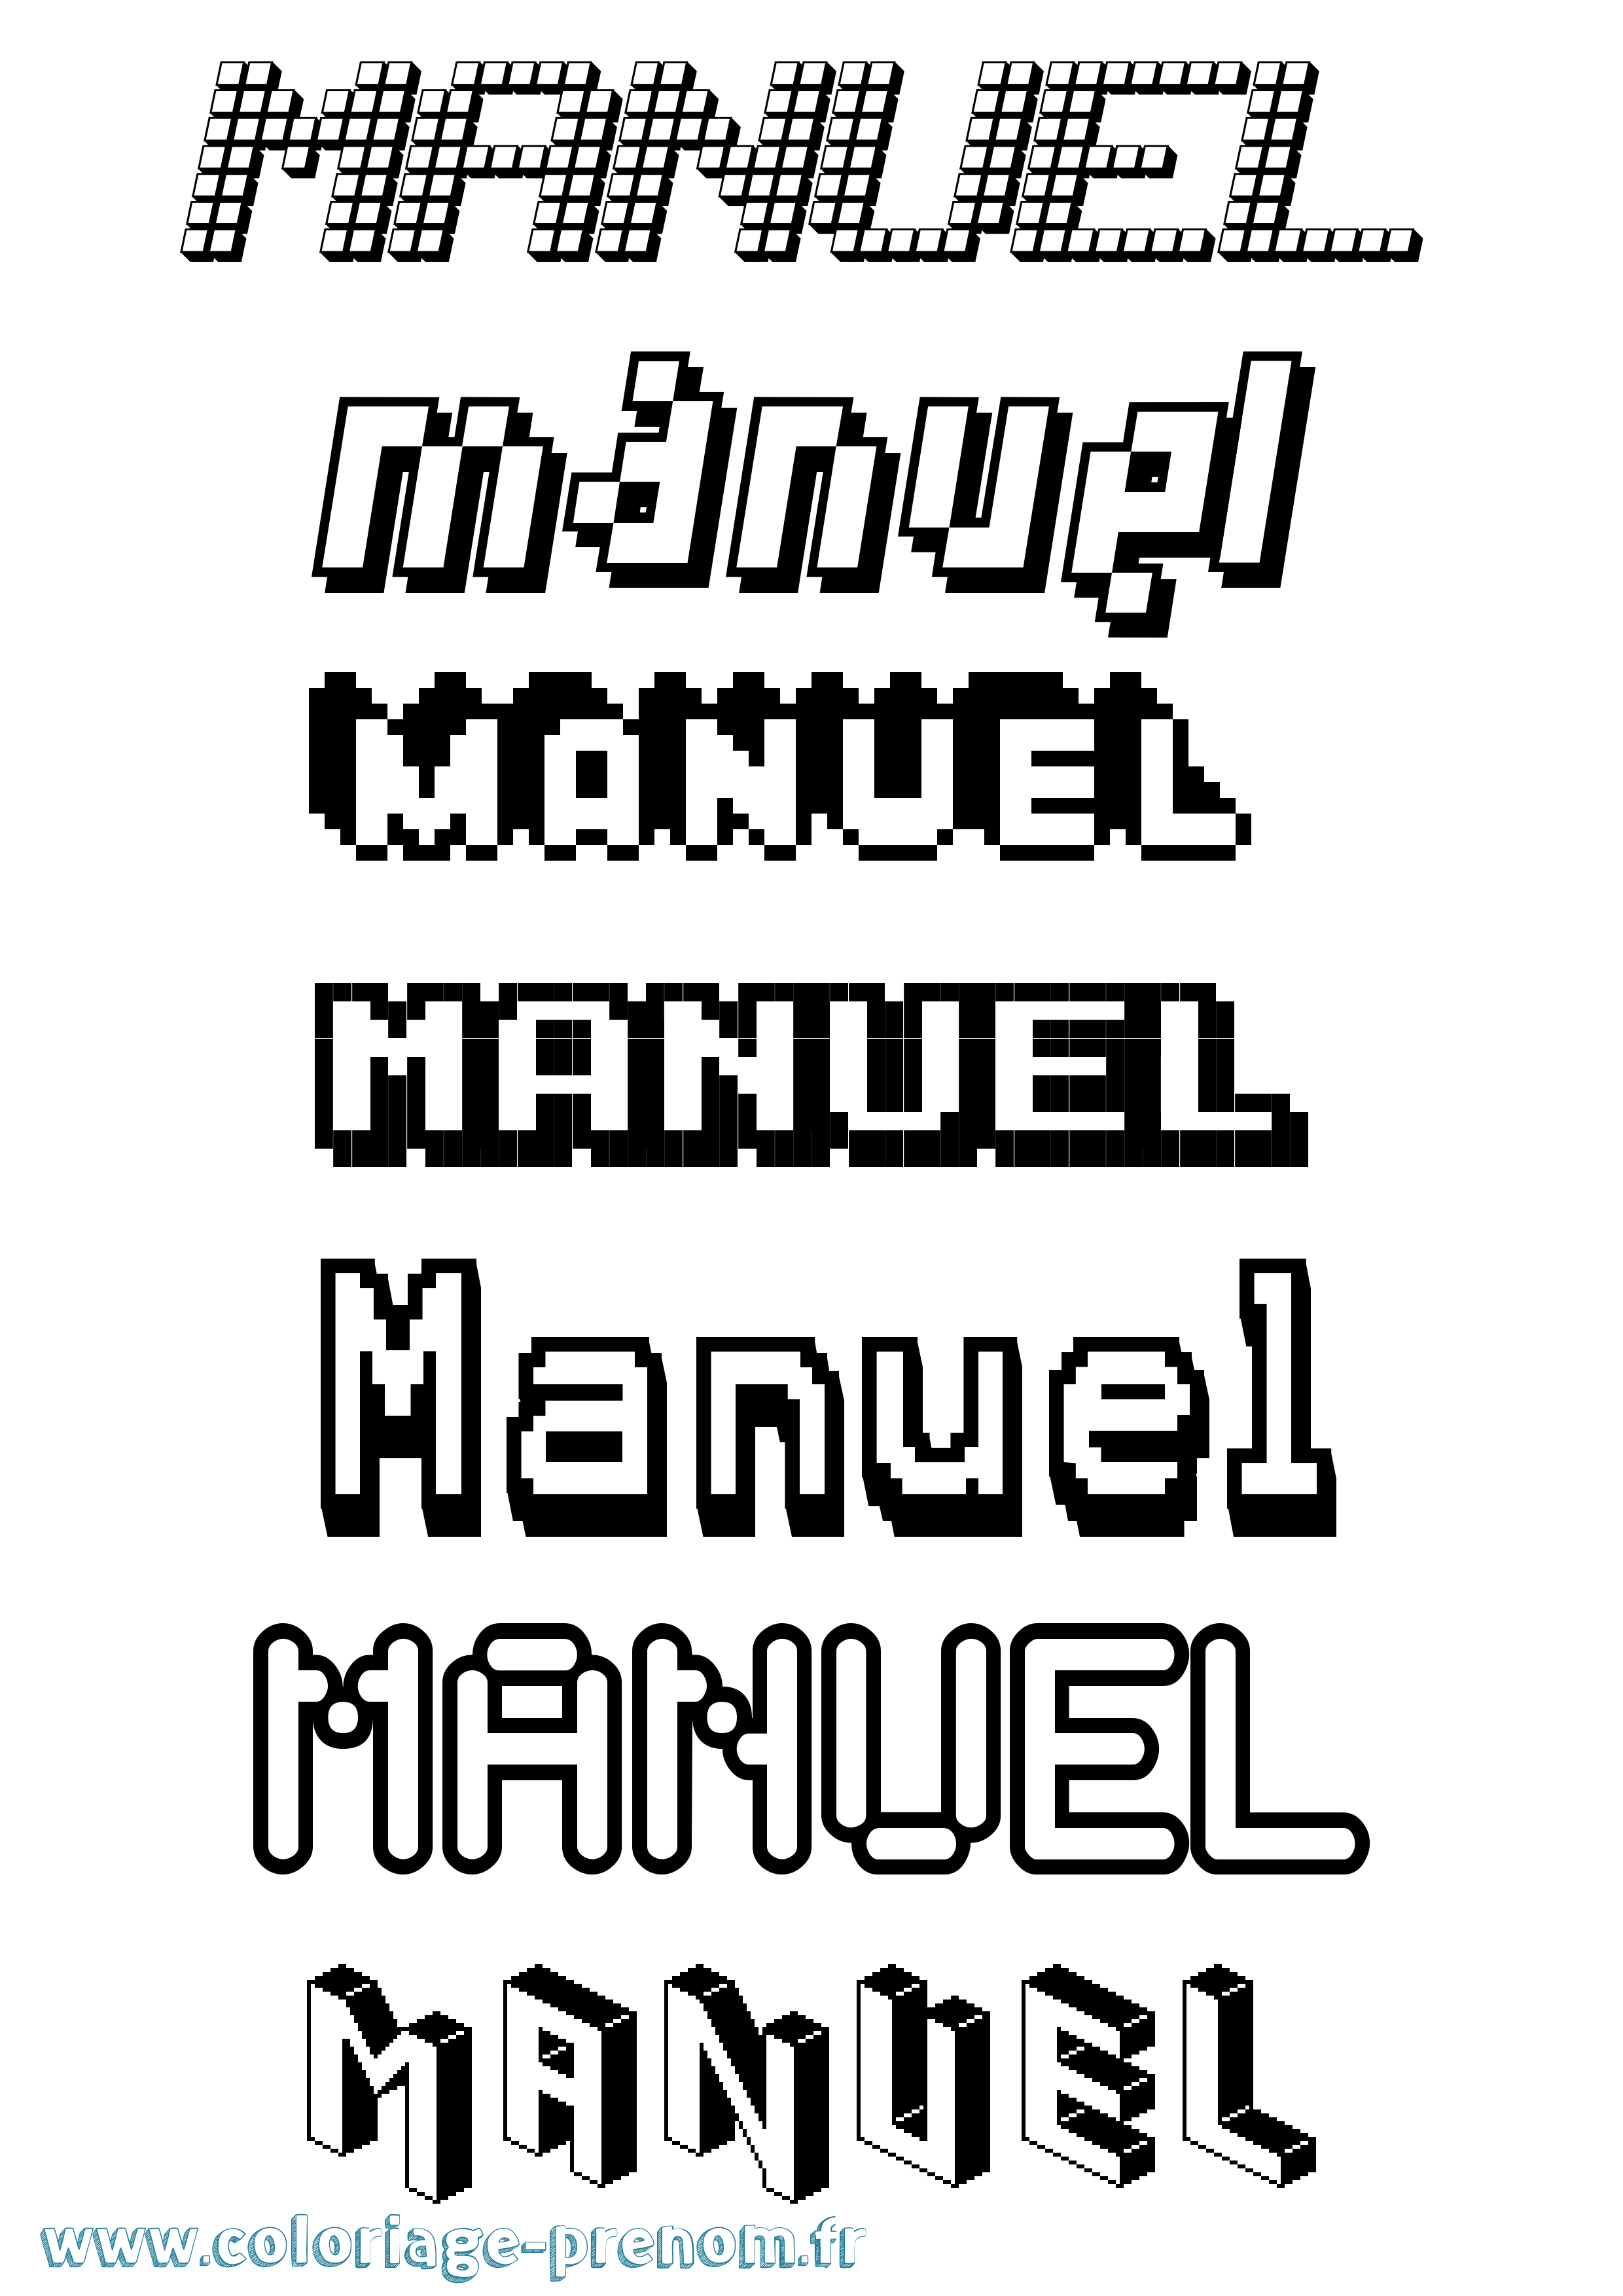 Coloriage prénom Manuel